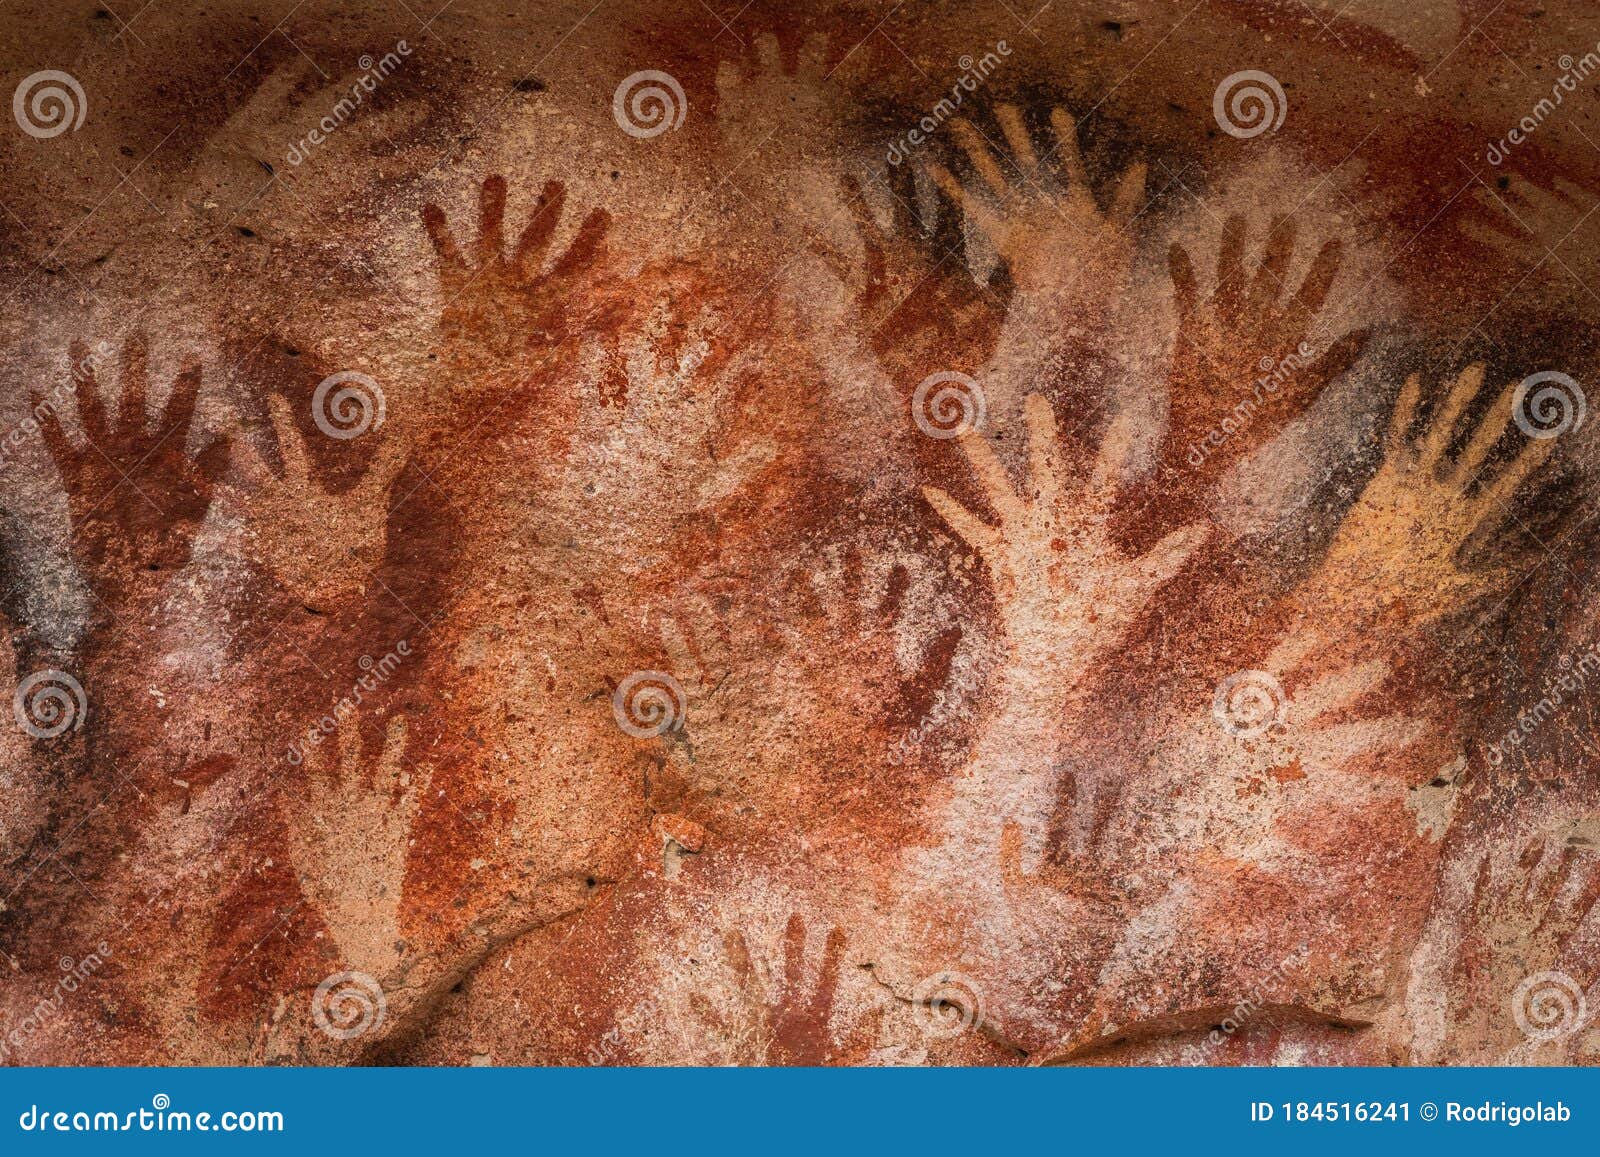 ancient hand paintings at cueva de las manos in santa cruz province, patagonia, argentina